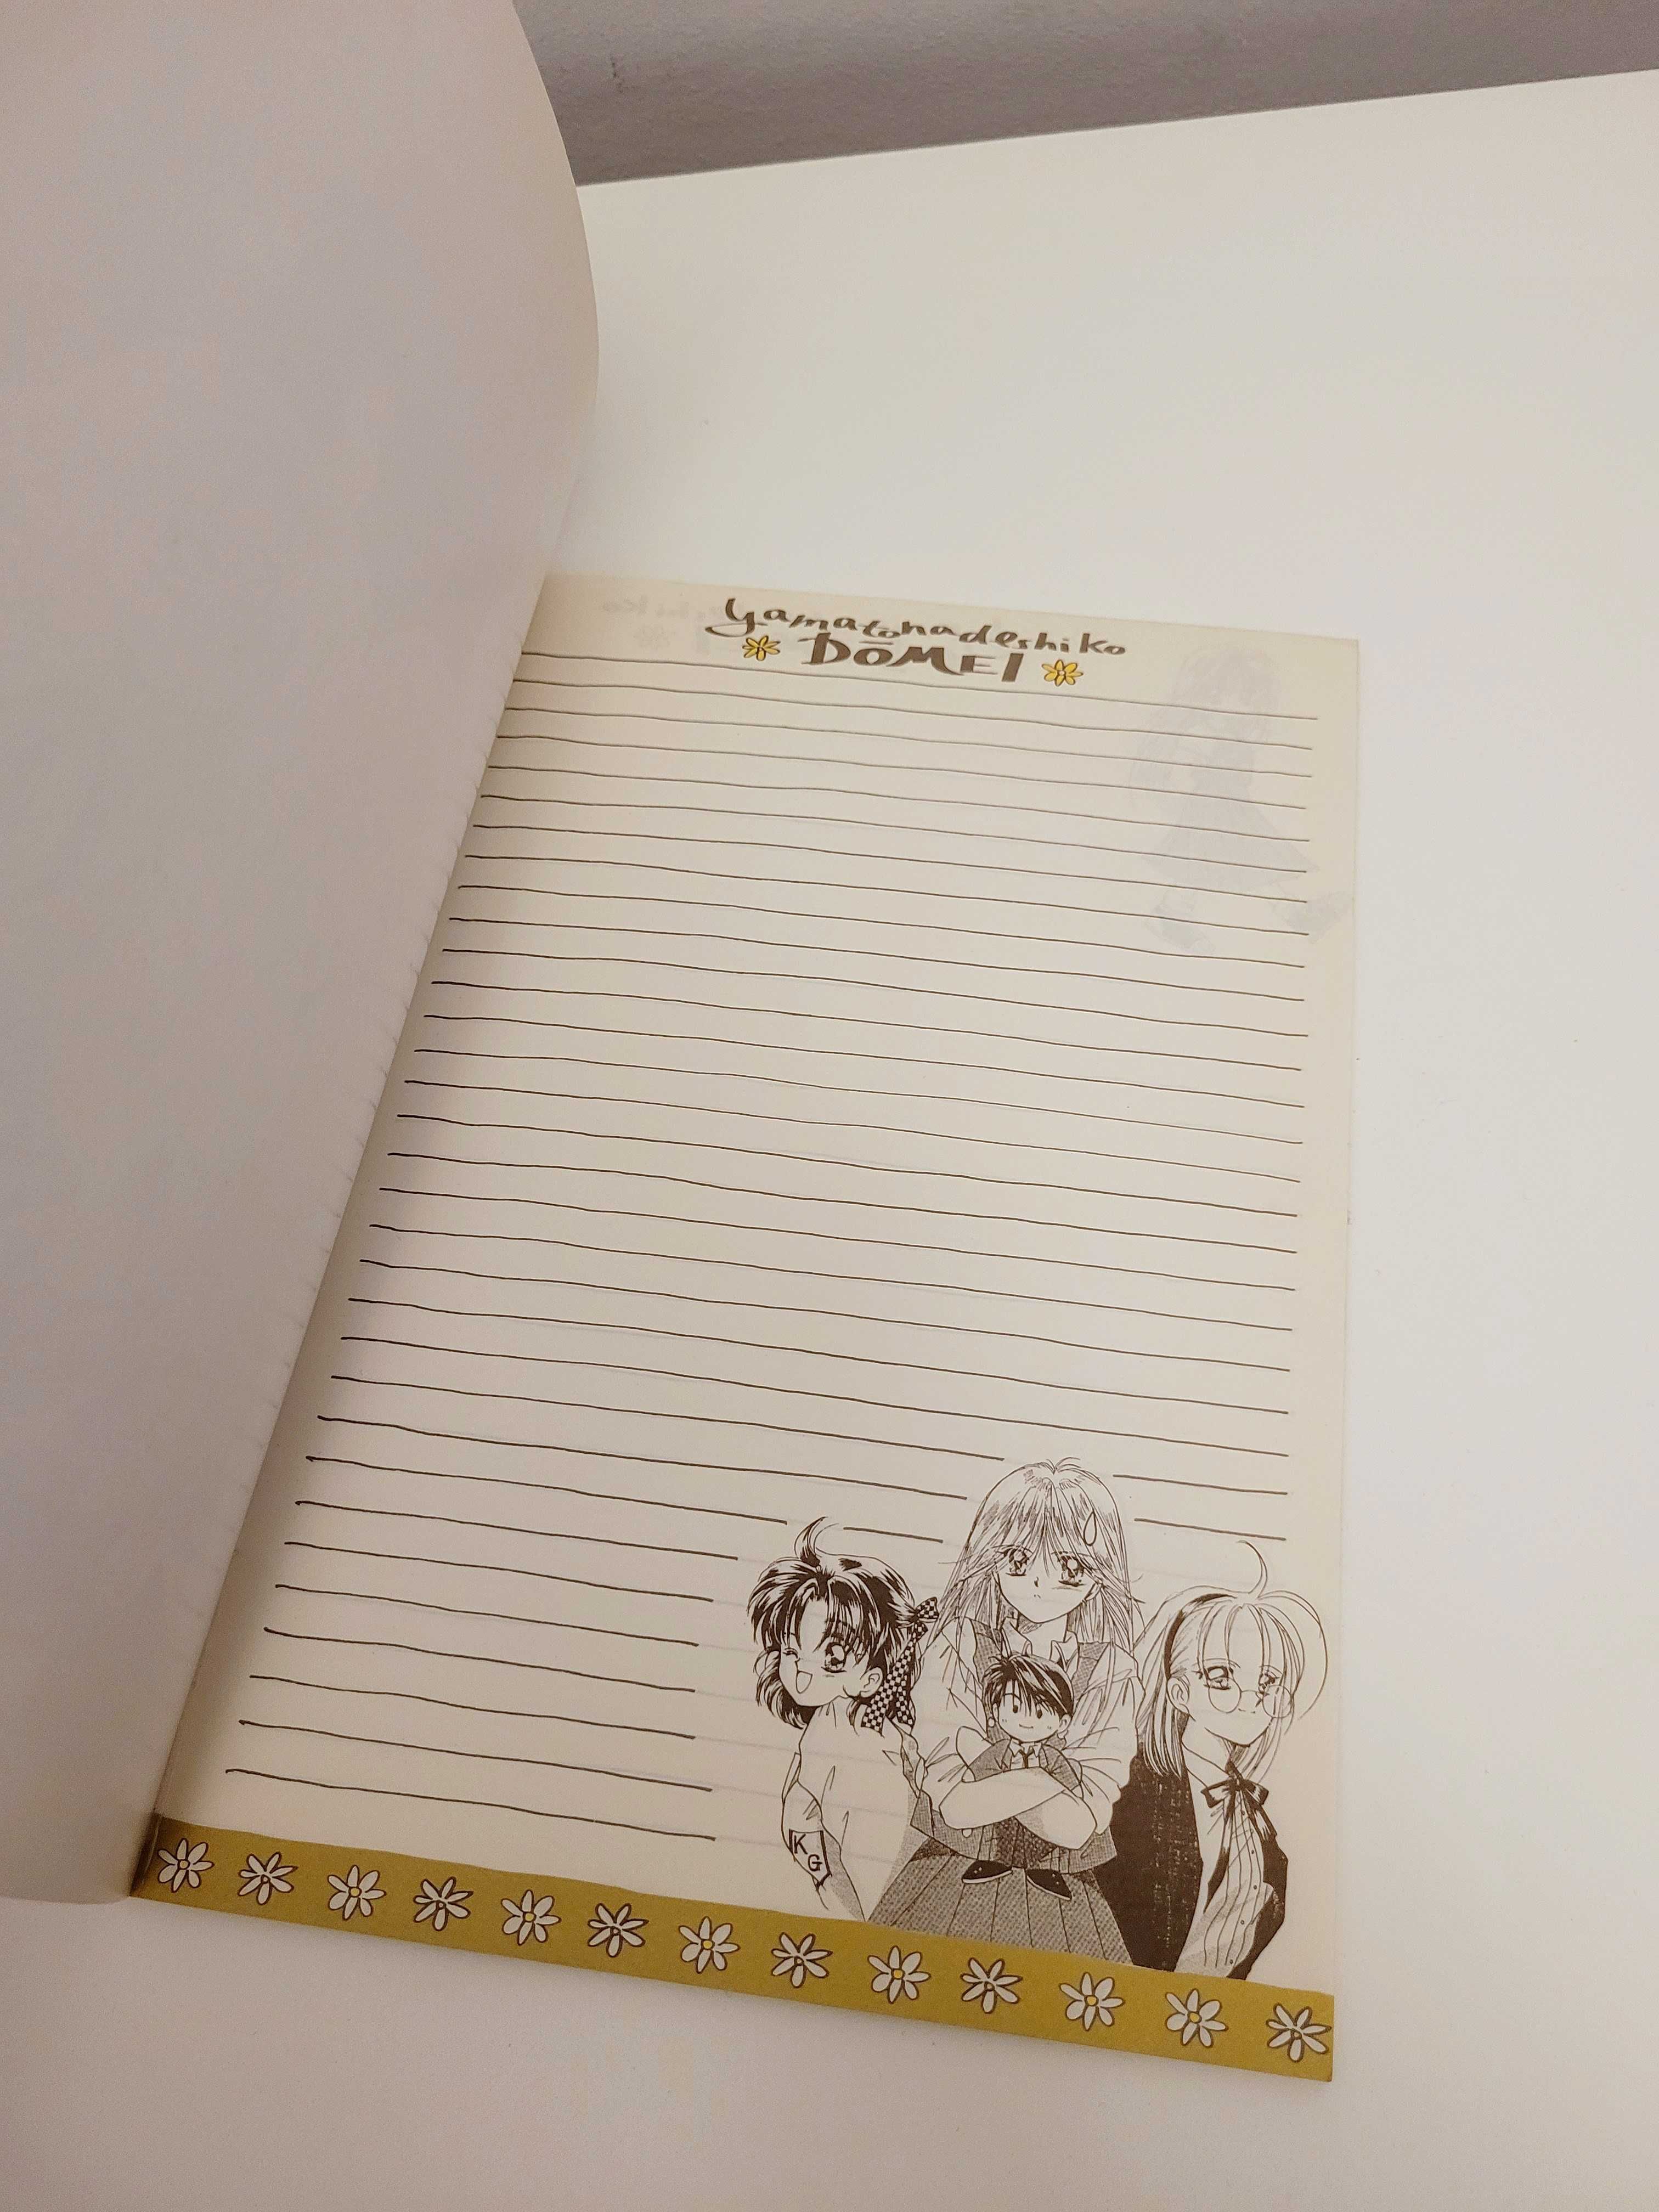 Yamatonadeshiko Domei notatnik manga anime vintage unikat oldschool